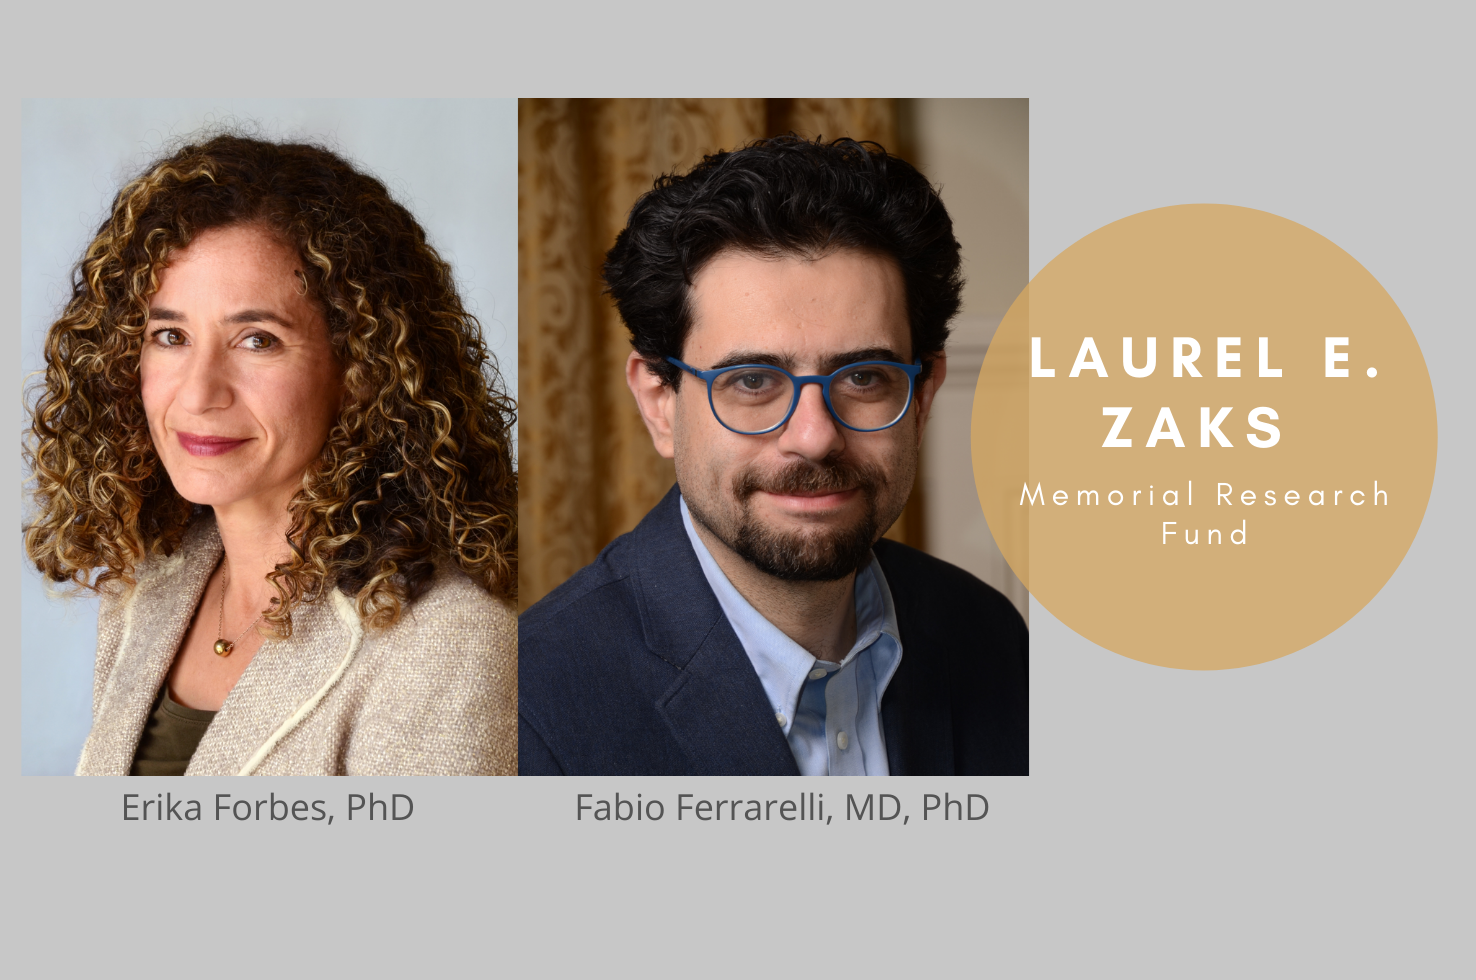 Erika Forbes, PhD, & Fabio Ferrarelli MD, PhD, Receive a Laurel E. Zaks Memorial Fund Award 